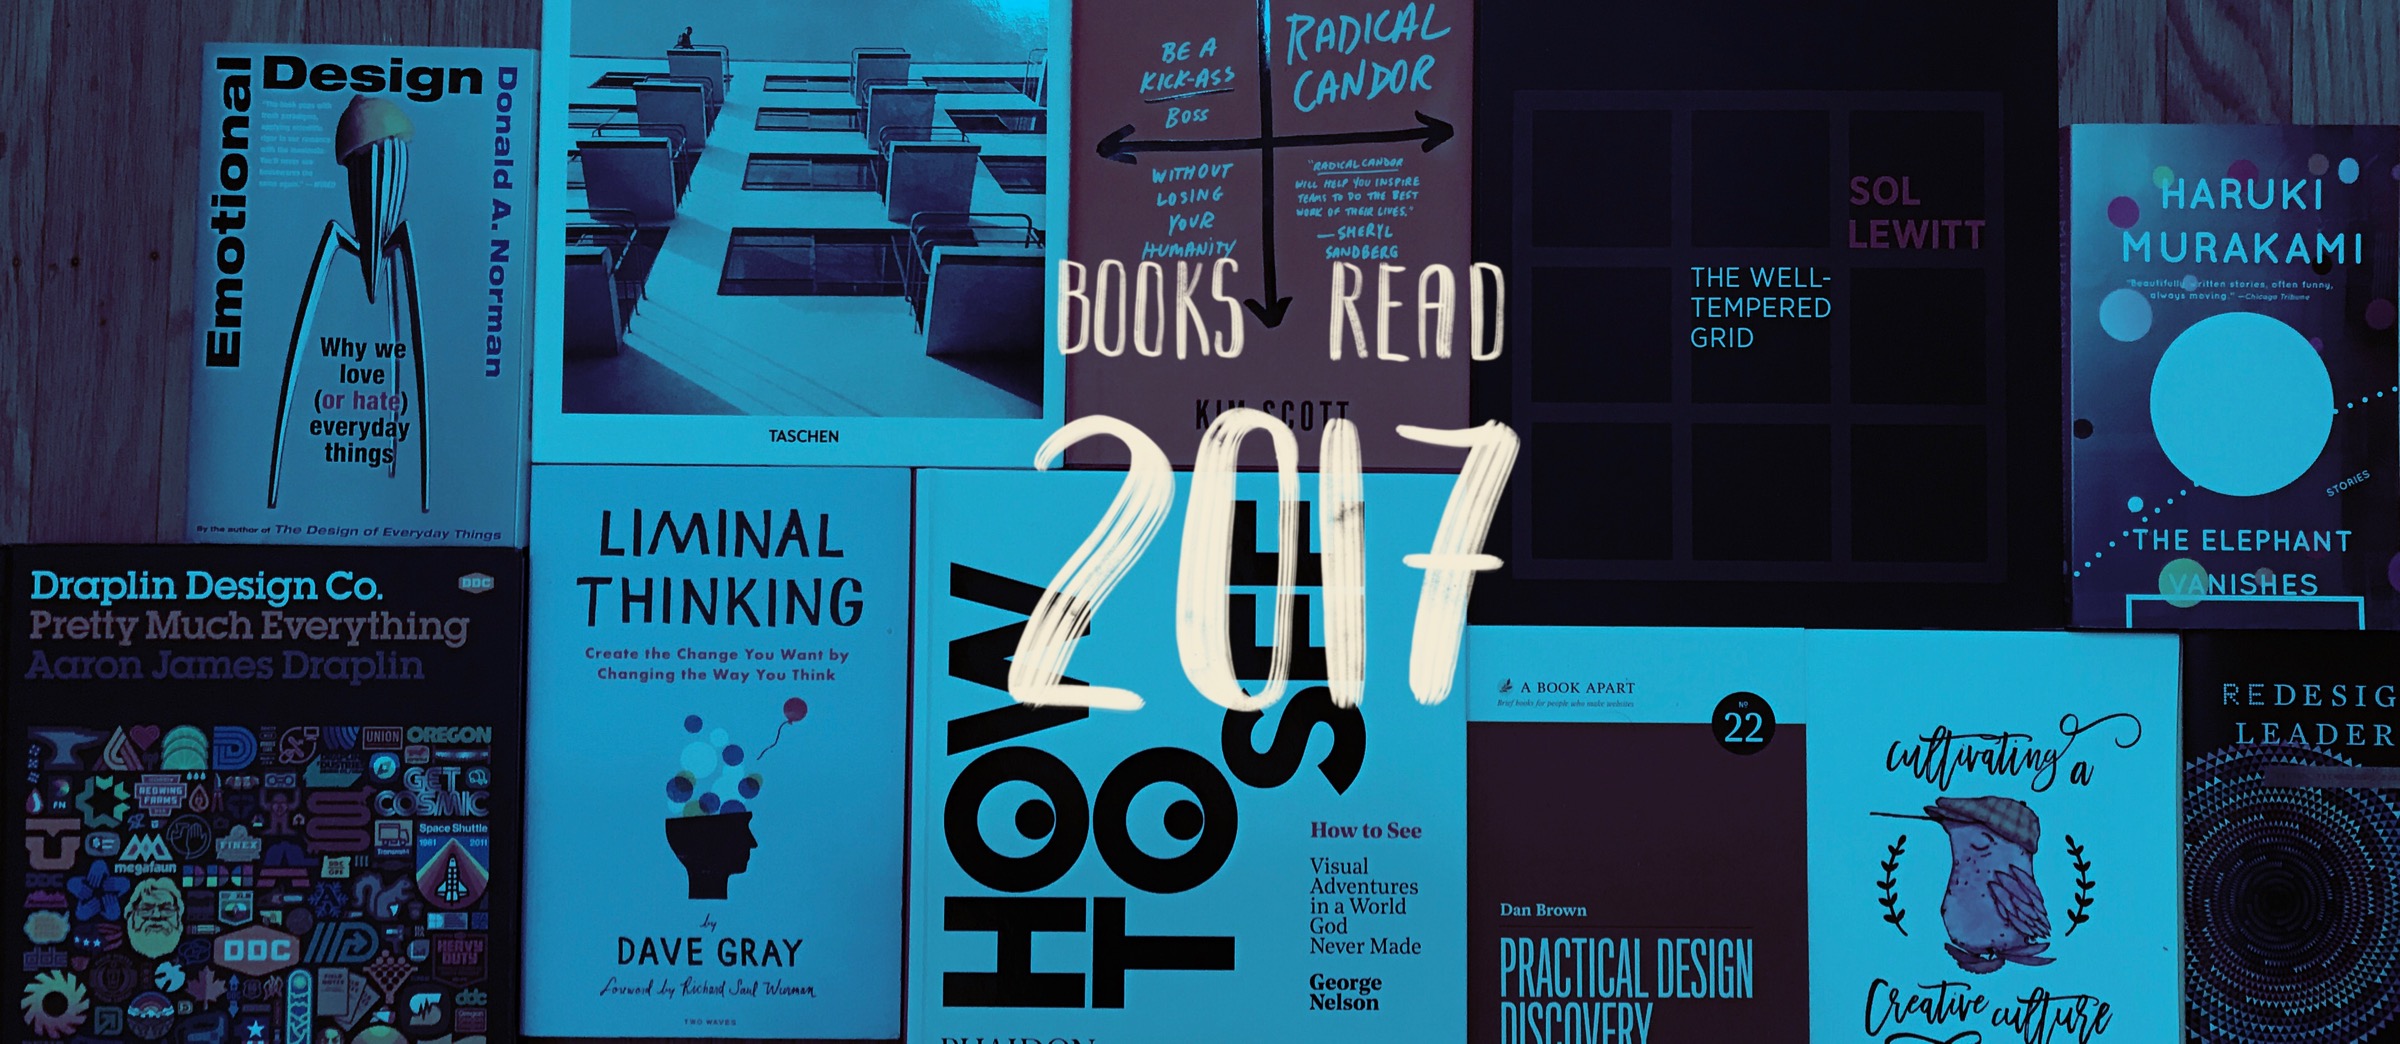 Books Read 2017 banner